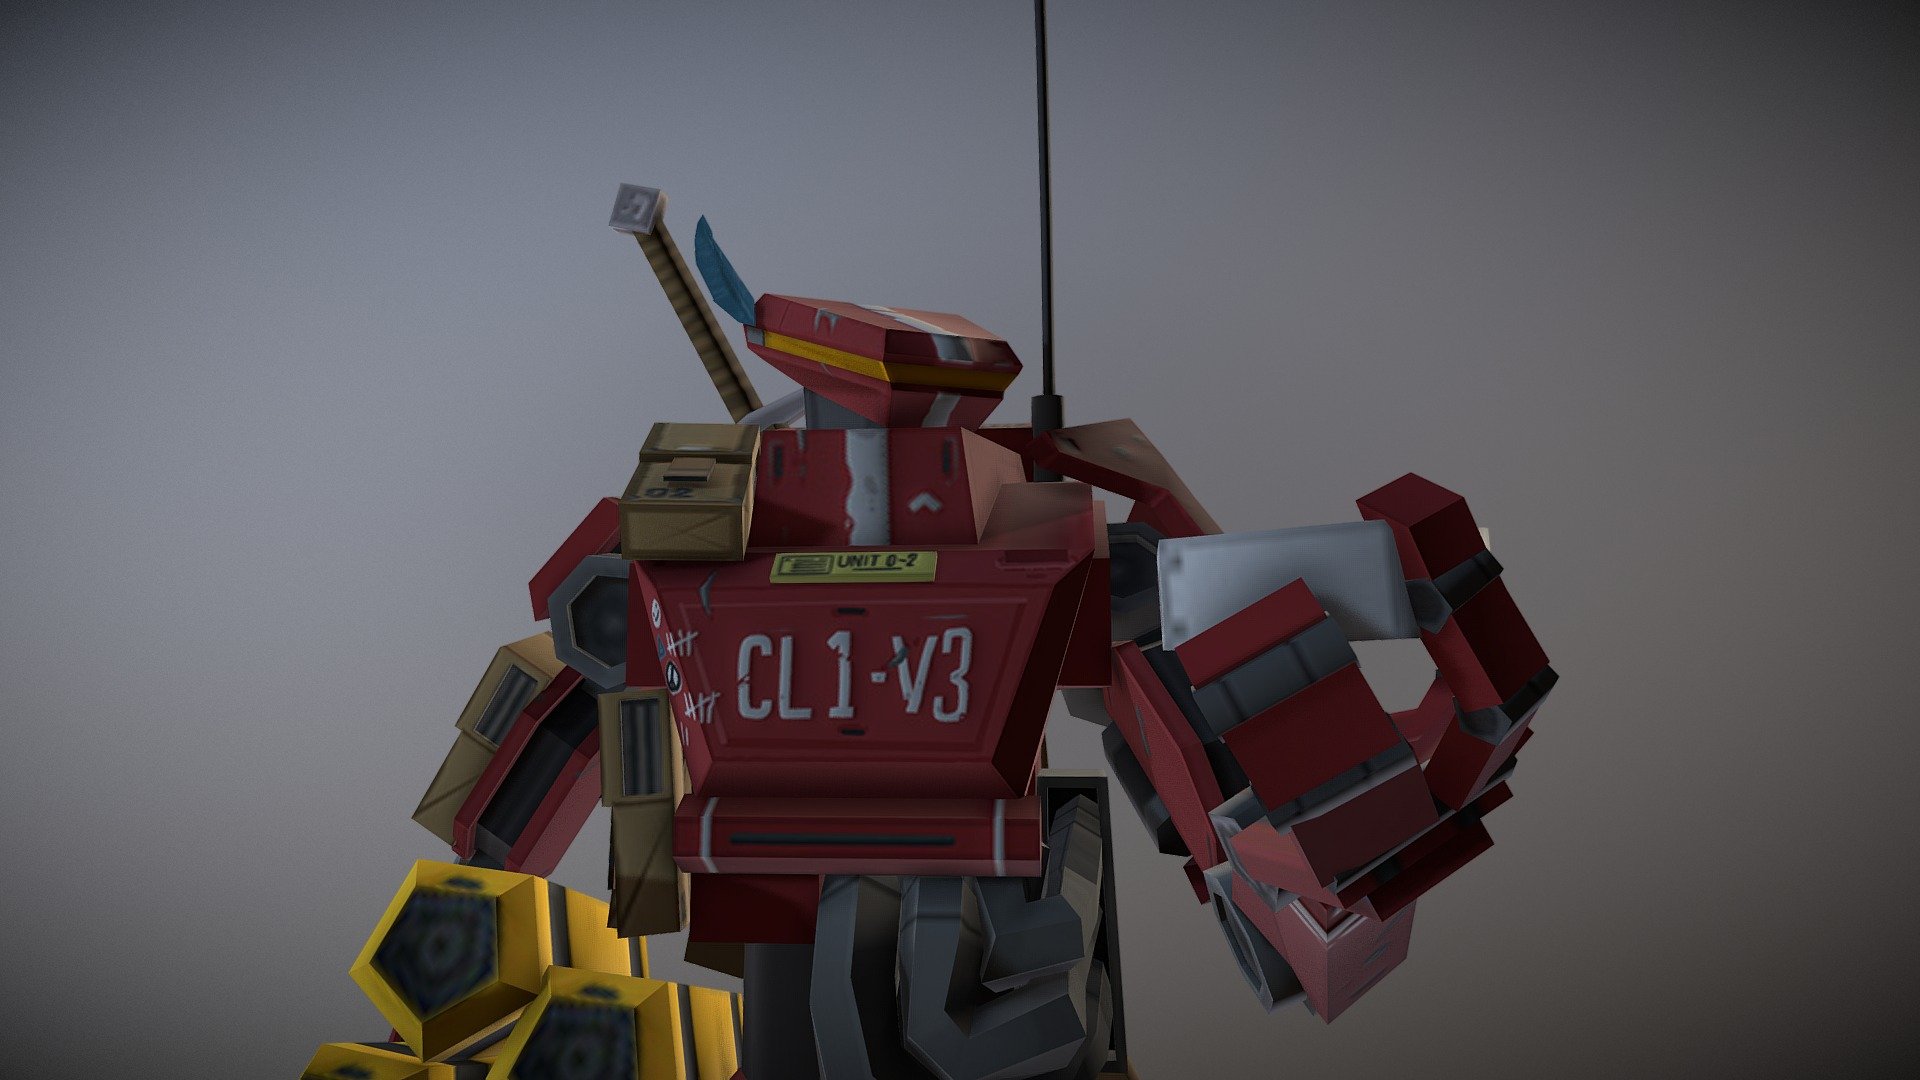 CL1-V3 Robot Space Faring Adventurer